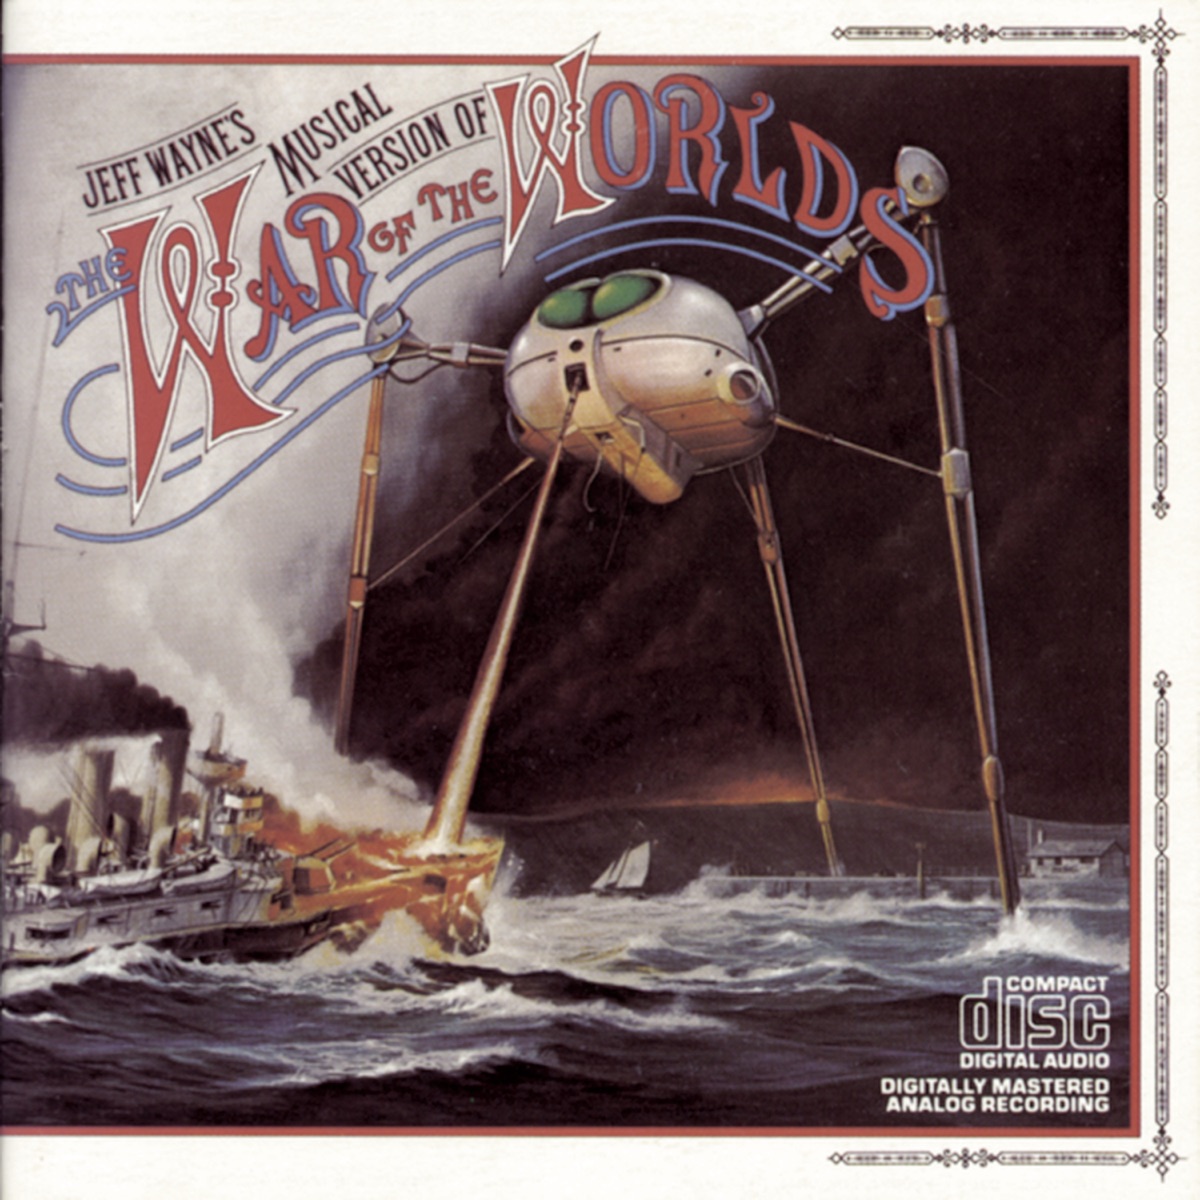 Jeff Wayne's Musical Version of "The War of the Worlds" - Album by Richard  Burton, Justin Hayward, David Essex, Phil Lynott, Chris Thompson, Julie  Covington & Jeff Wayne - Apple Music